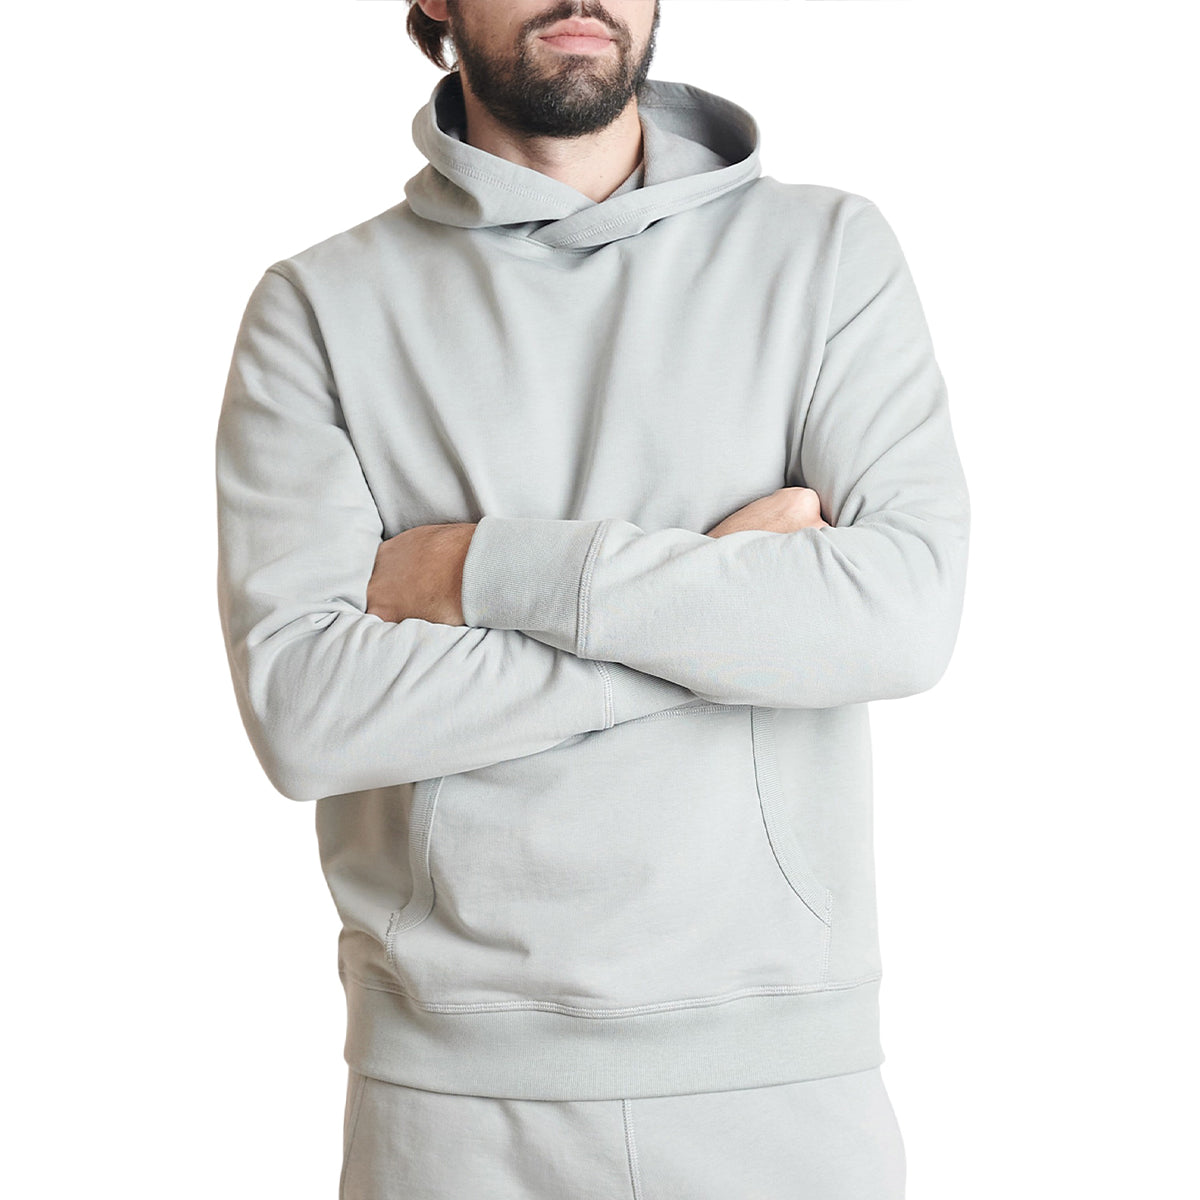 NBD Premium Collection Hoodie-Hoodies & Sweatshirts-Spittin Chiclets-Grey-S-Barstool Sports